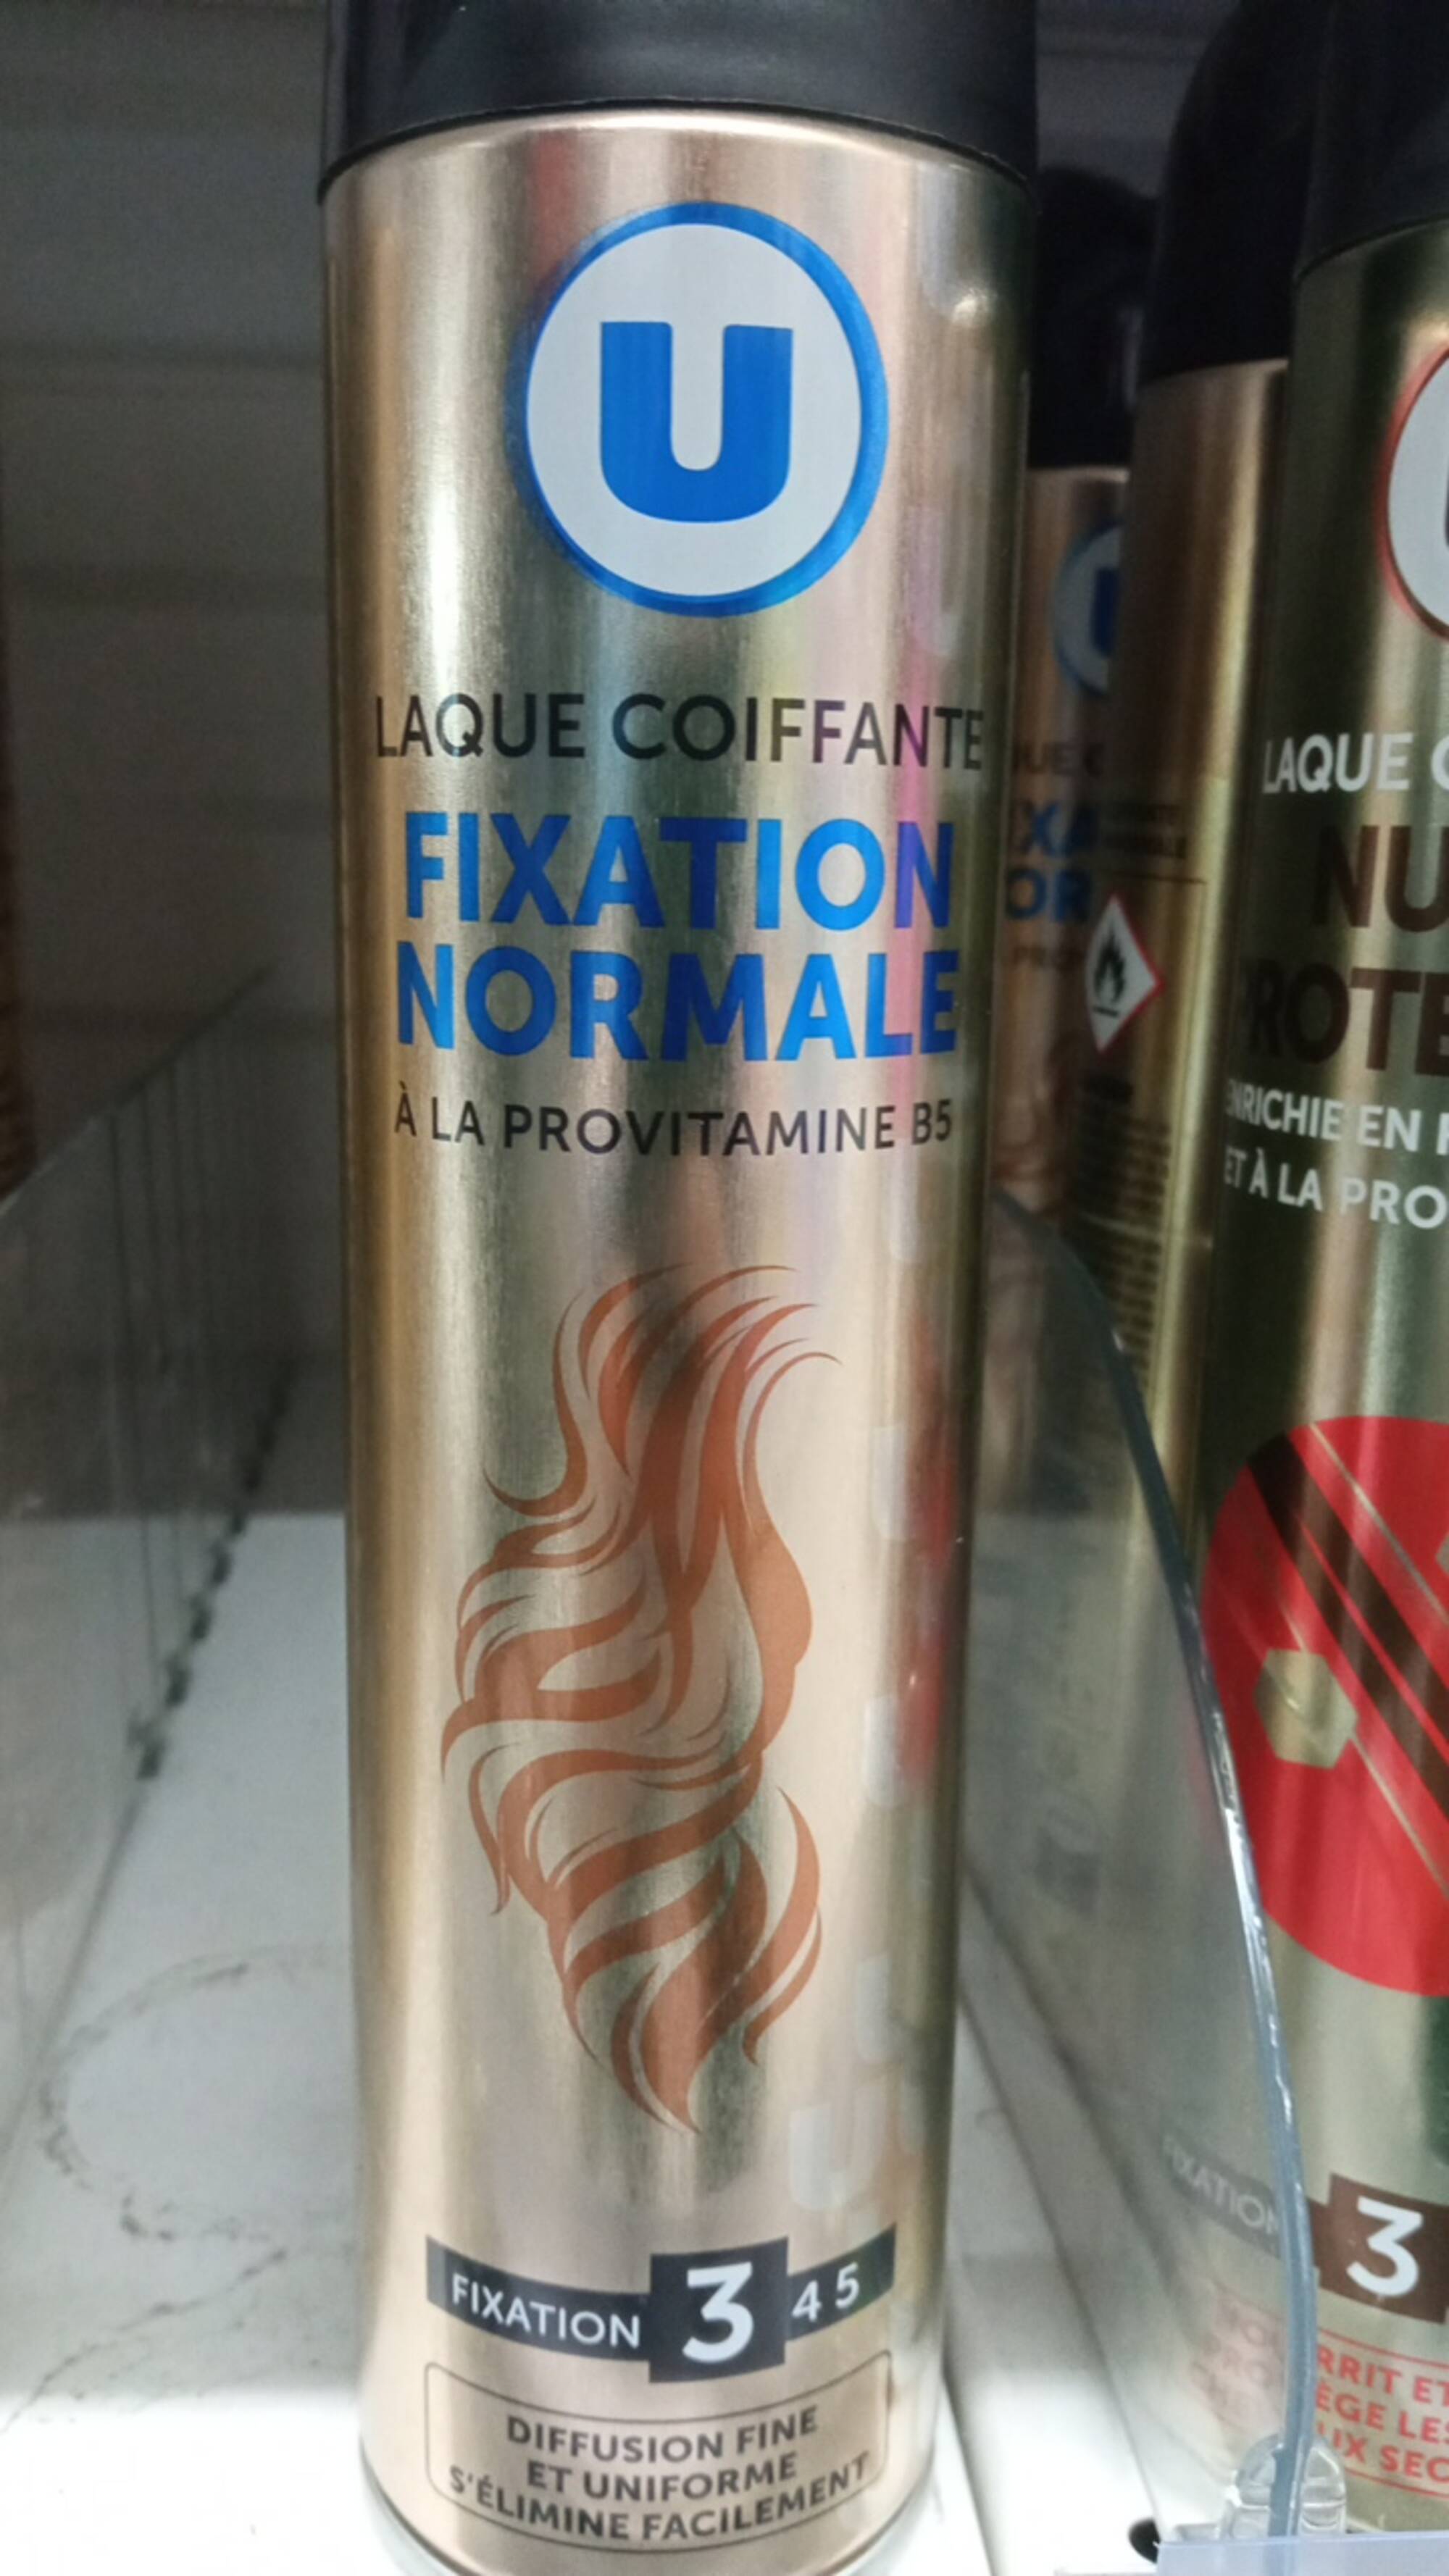 BY U - Fixation normale - Laque coiffante